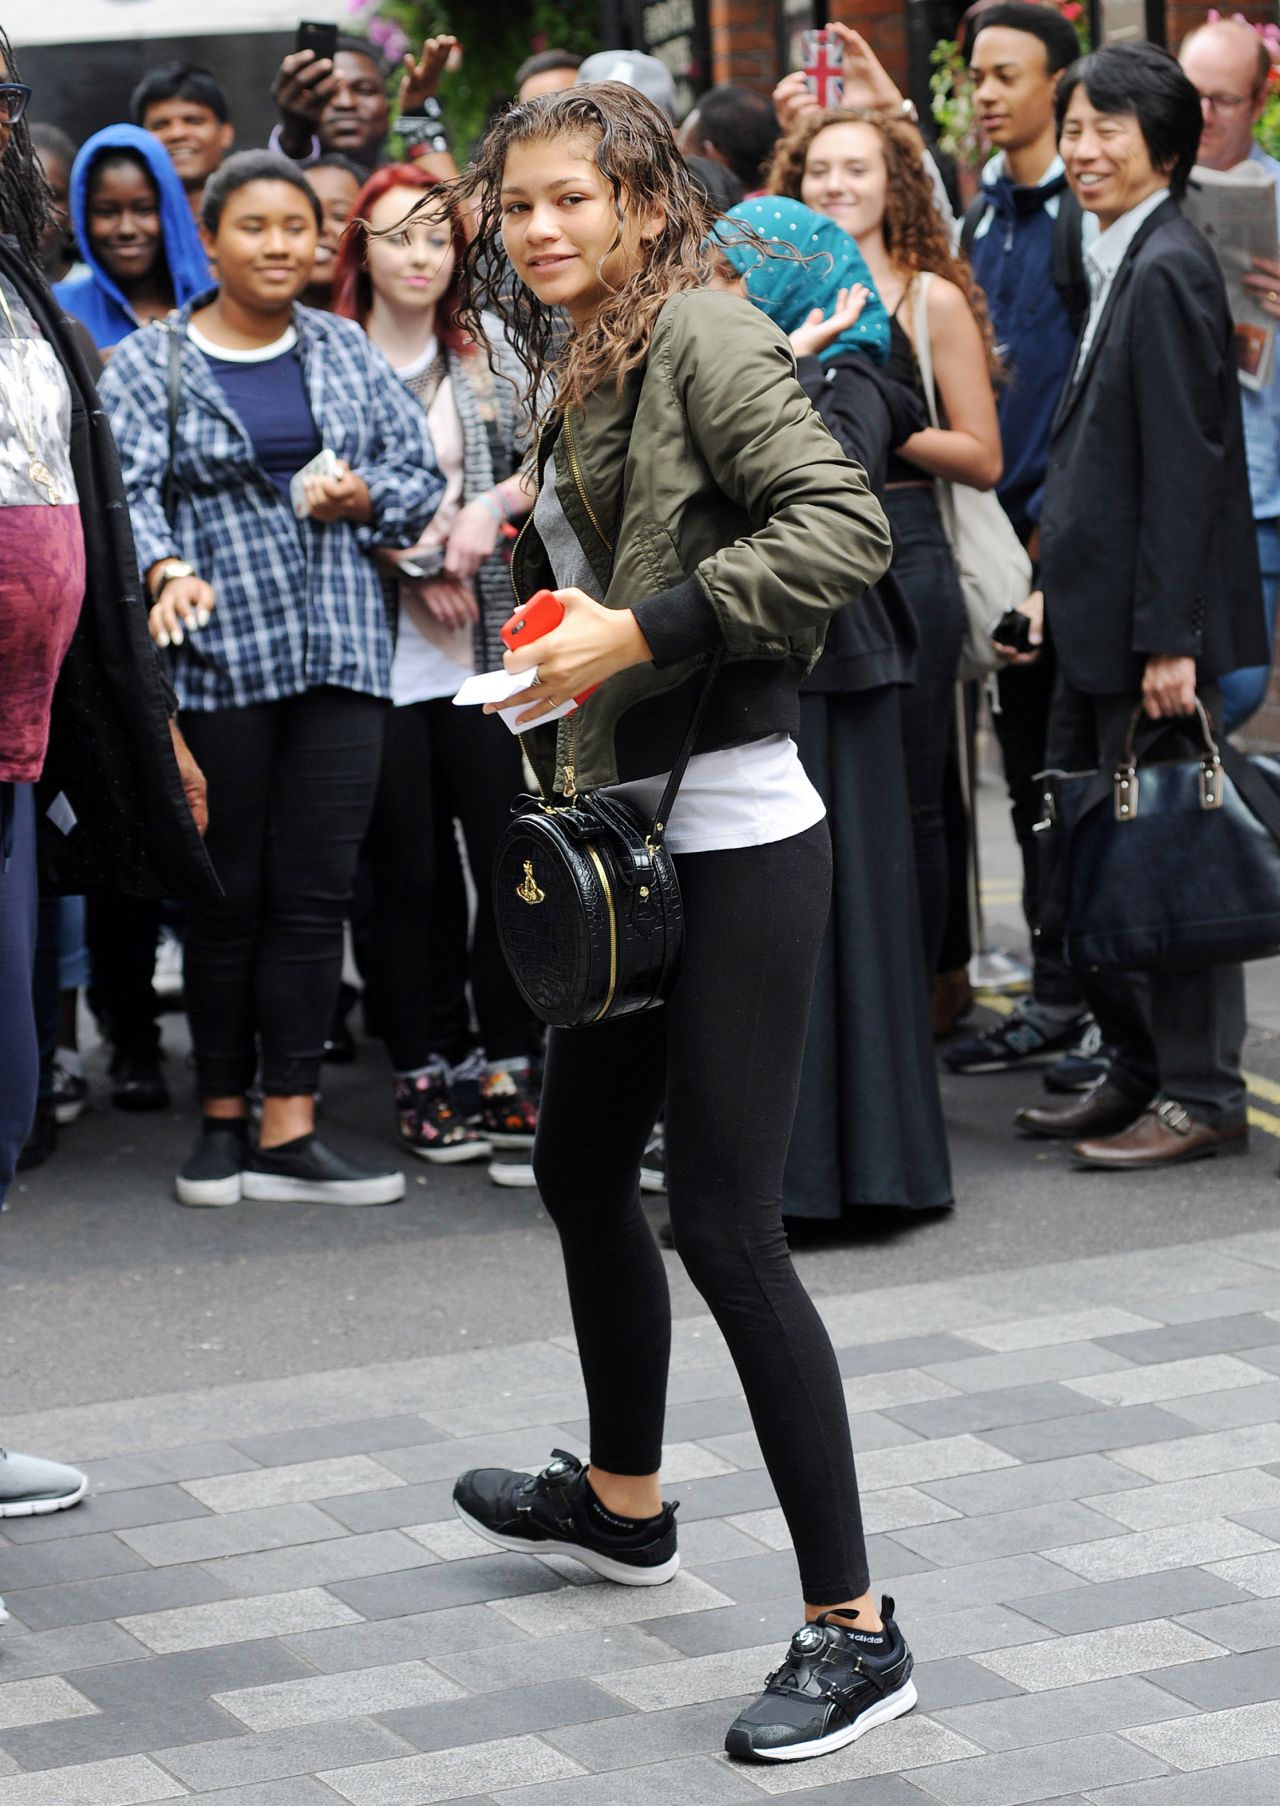 Zendaya in Tights - Outside Her Hotel in London, August 2015 • CelebMafia